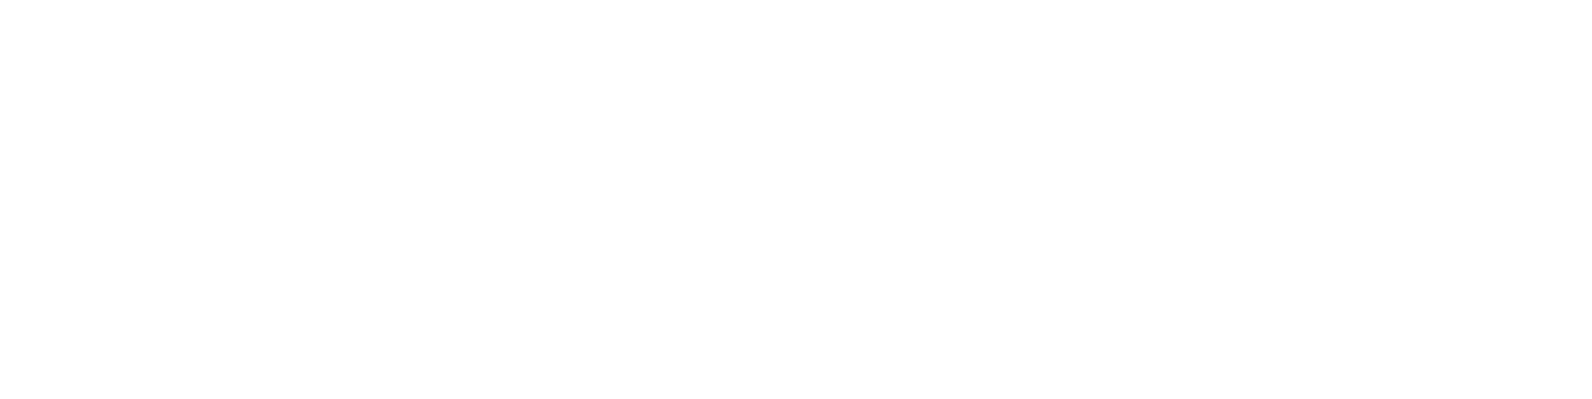 QuantaSing Group logo large for dark backgrounds (transparent PNG)